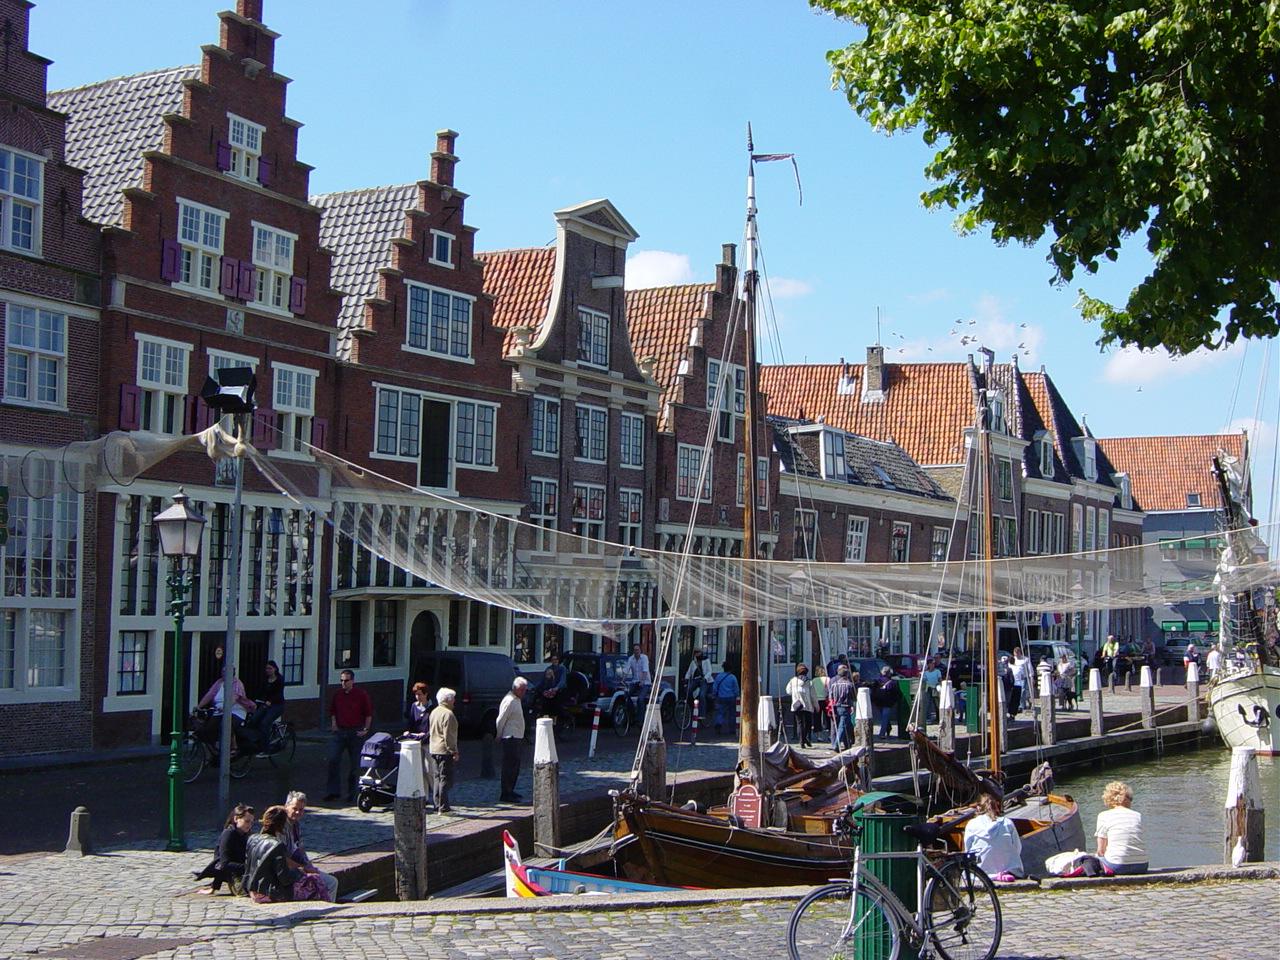 Foto Binnenhaven in Hoorn, Zien, Buurt, plein, park - #1